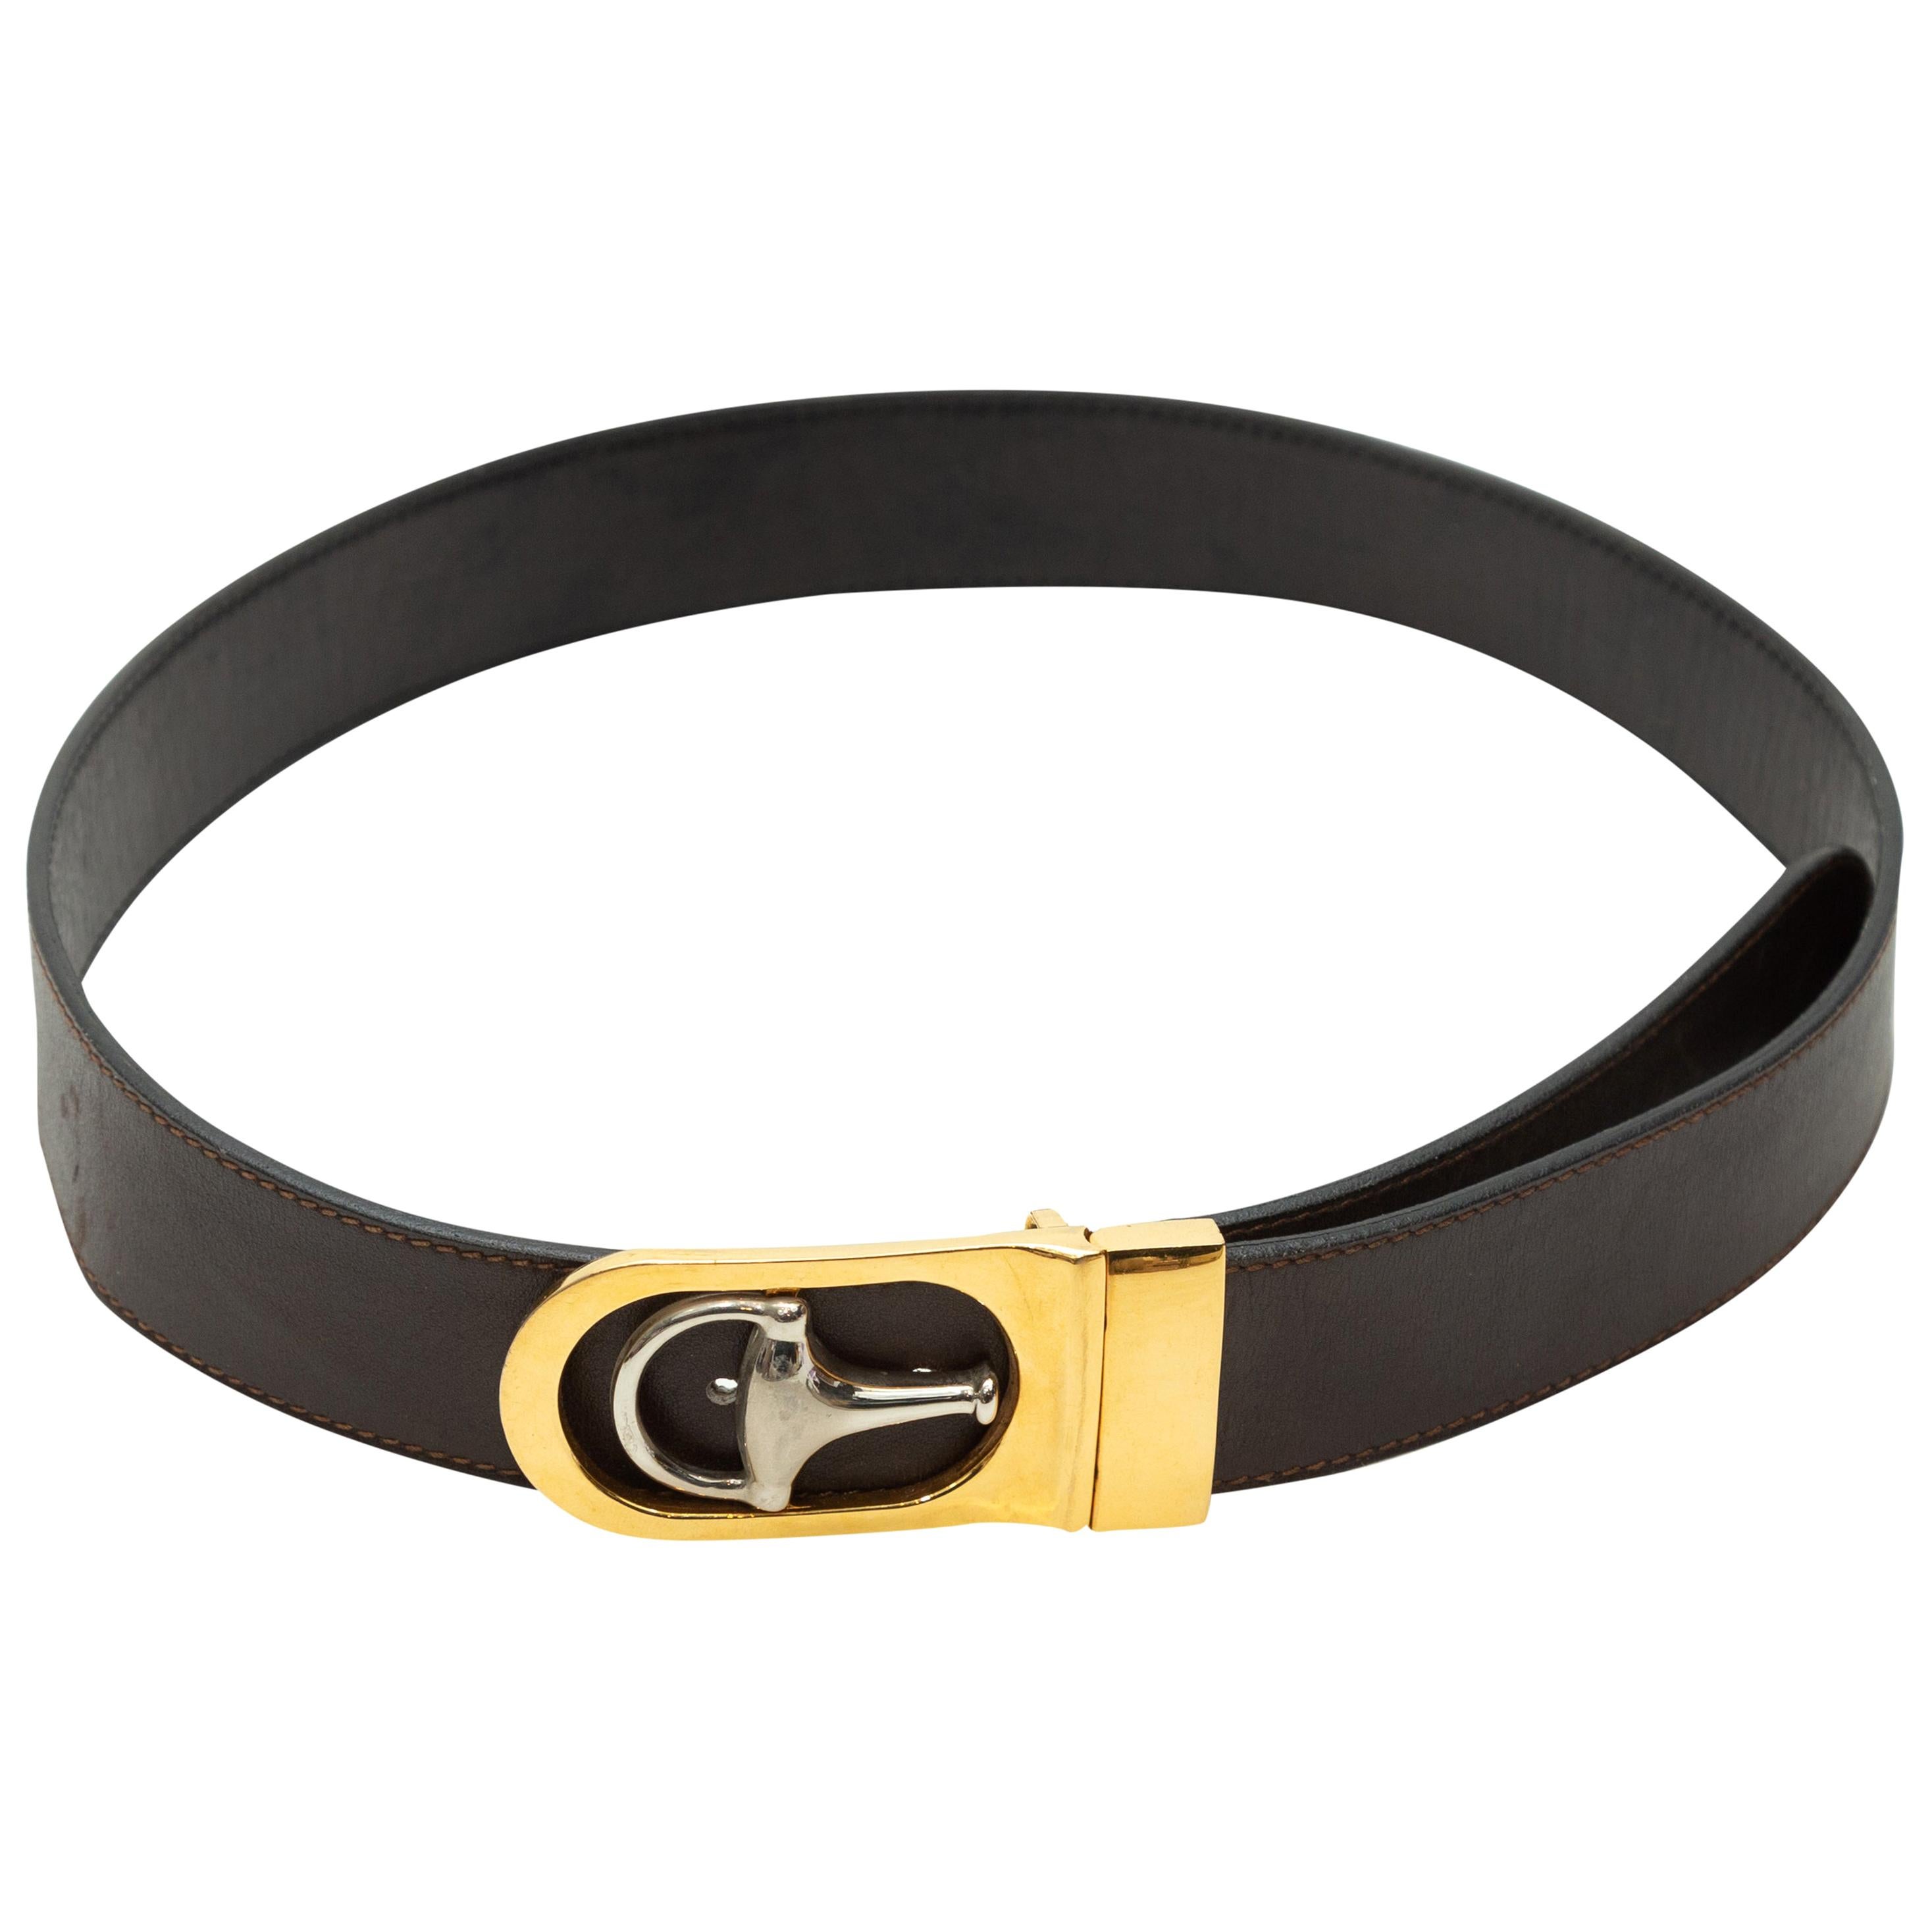 Gucci Black Leather Horsebit Belt